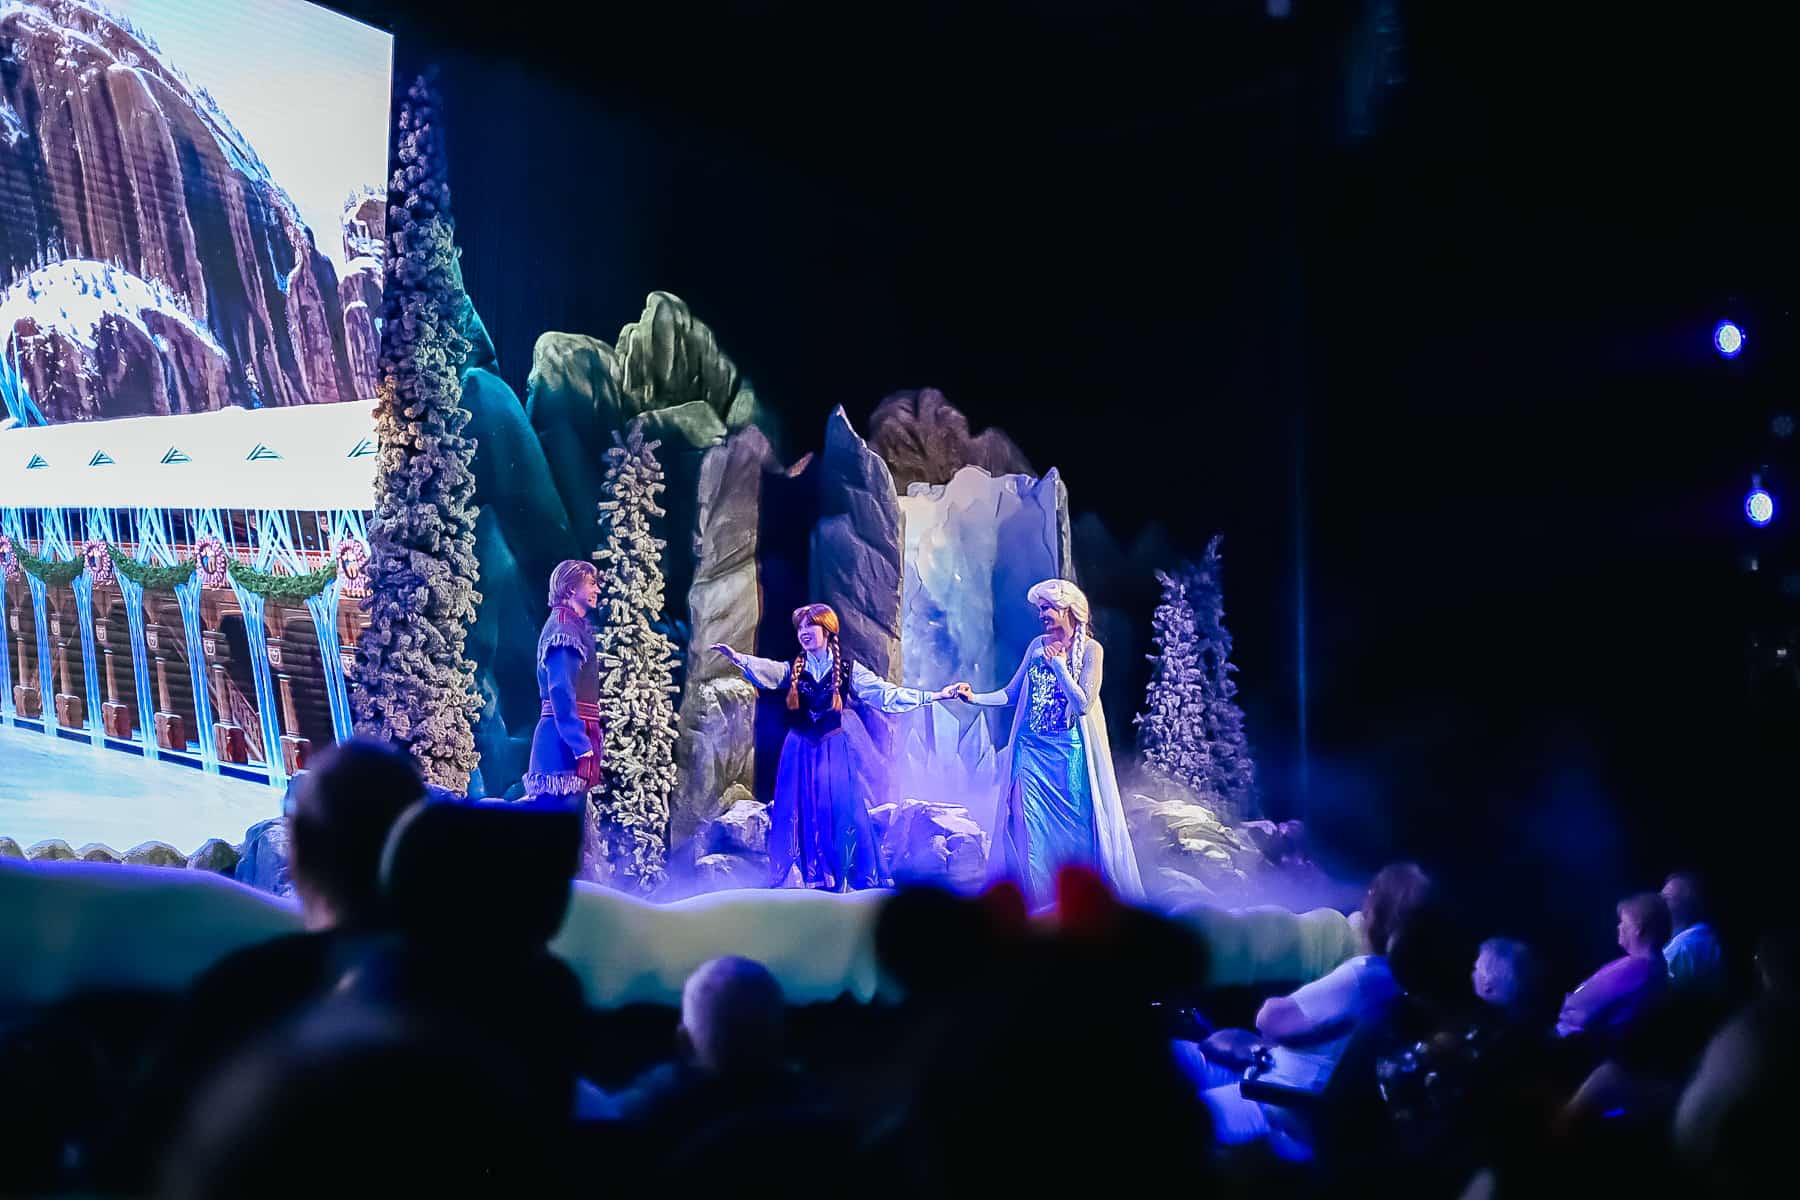 Elsa greets Anna on stage. 